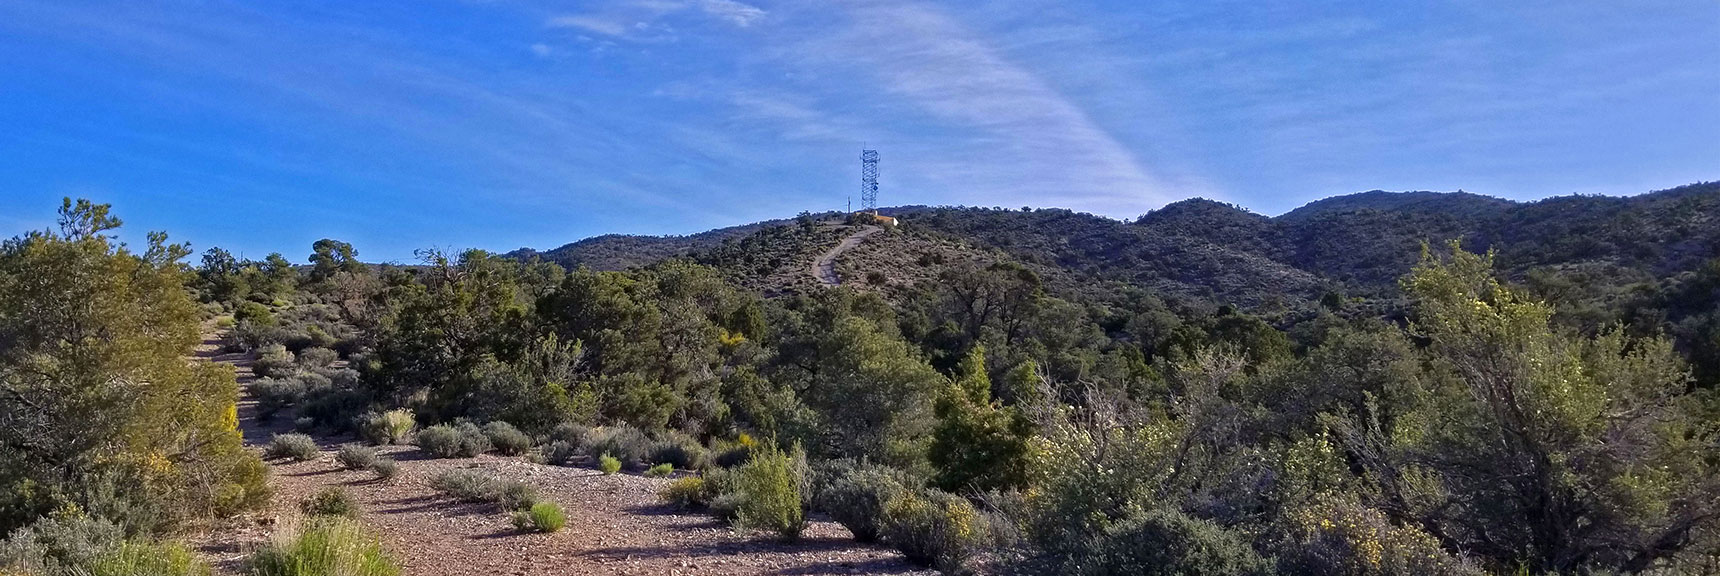 Around the Corner the Communications Tower Marks True Trailhead Beginning | Windy Peak | Rainbow Mountain Wilderness, Nevada